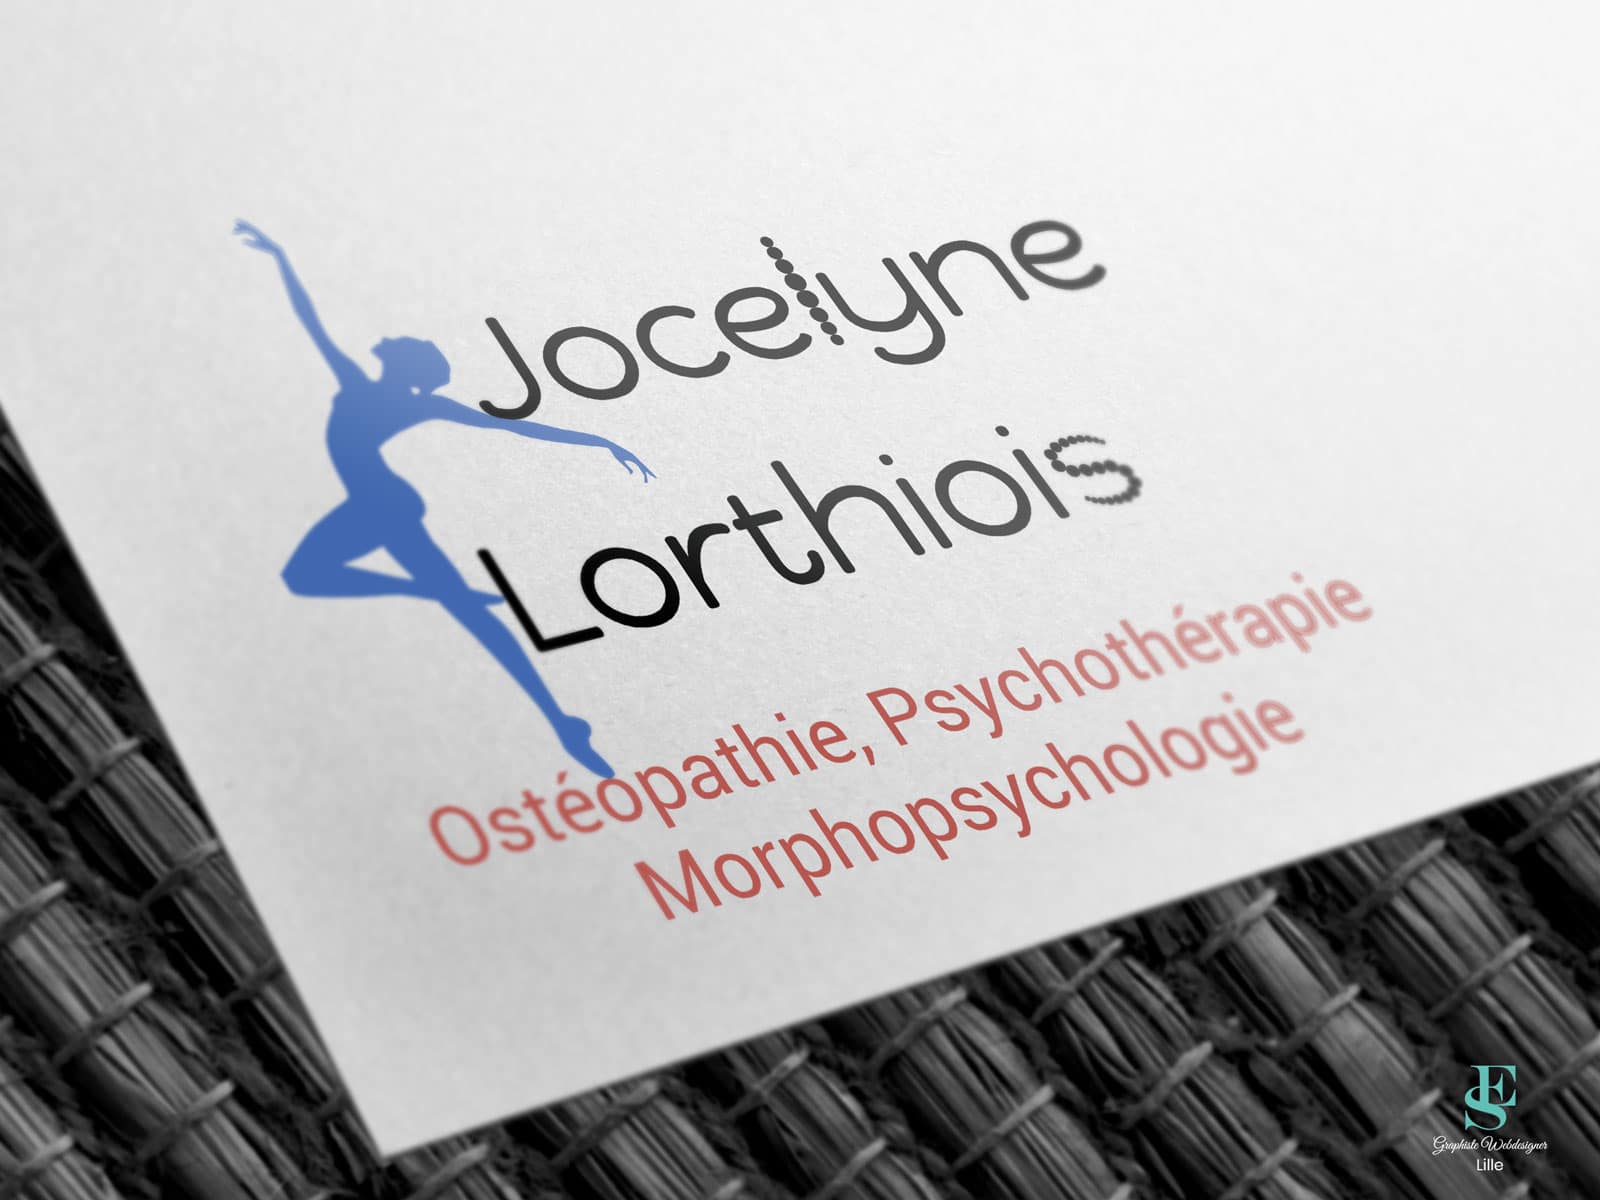 Logo Jocelyne Lorthiois, ostéopathe